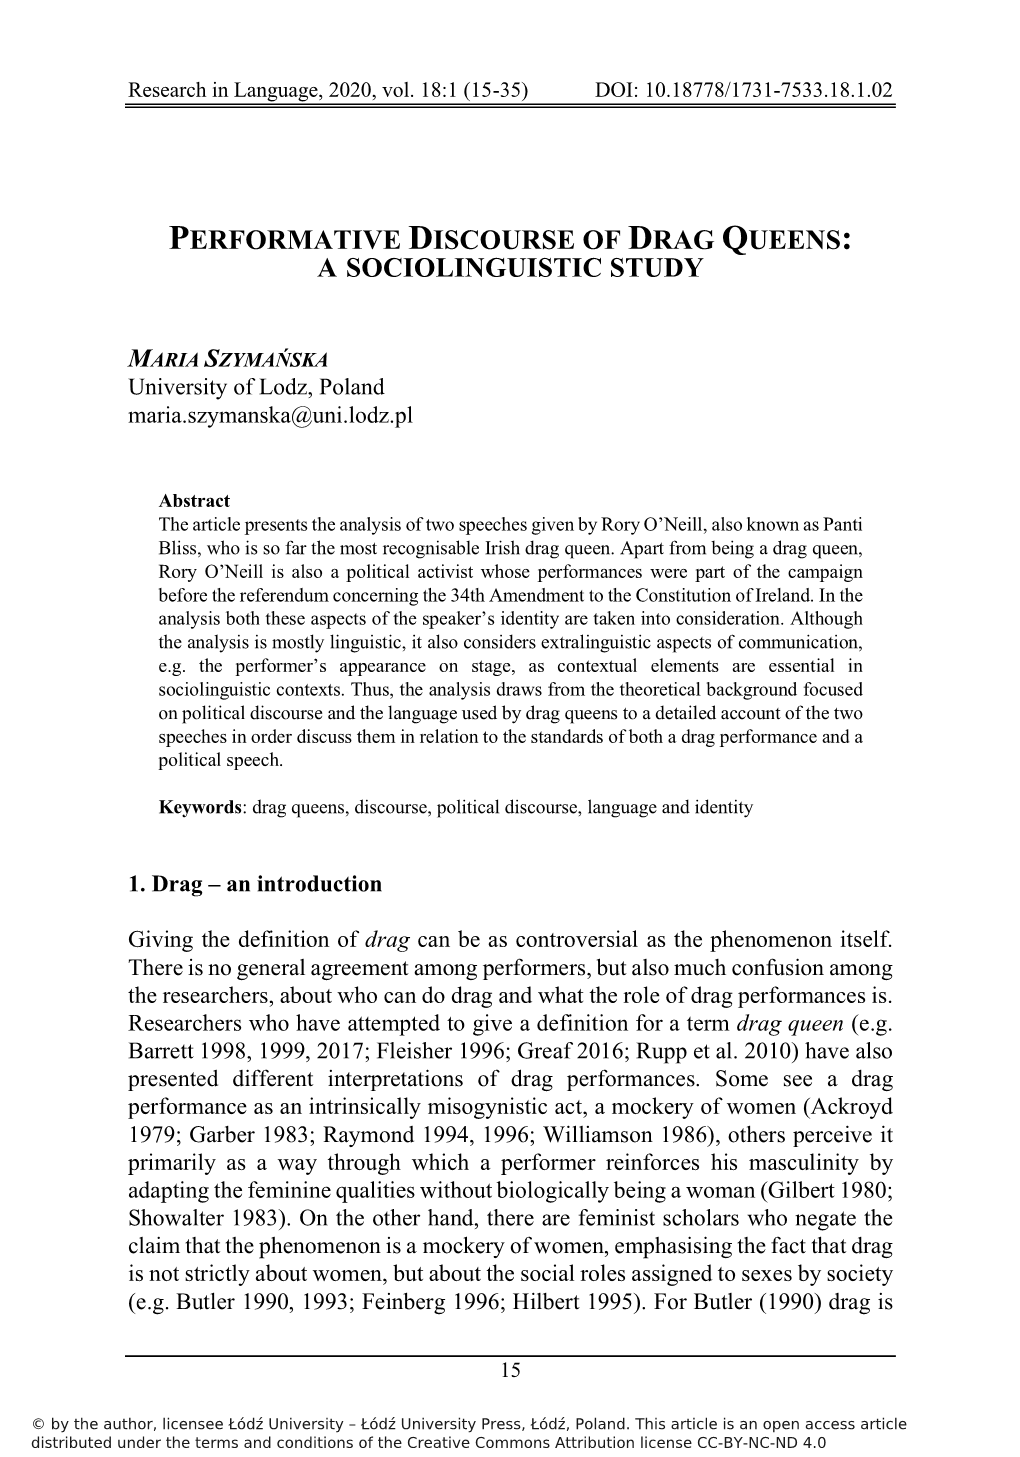 Performative Discourse of Drag Queens: a Sociolinguistic Study